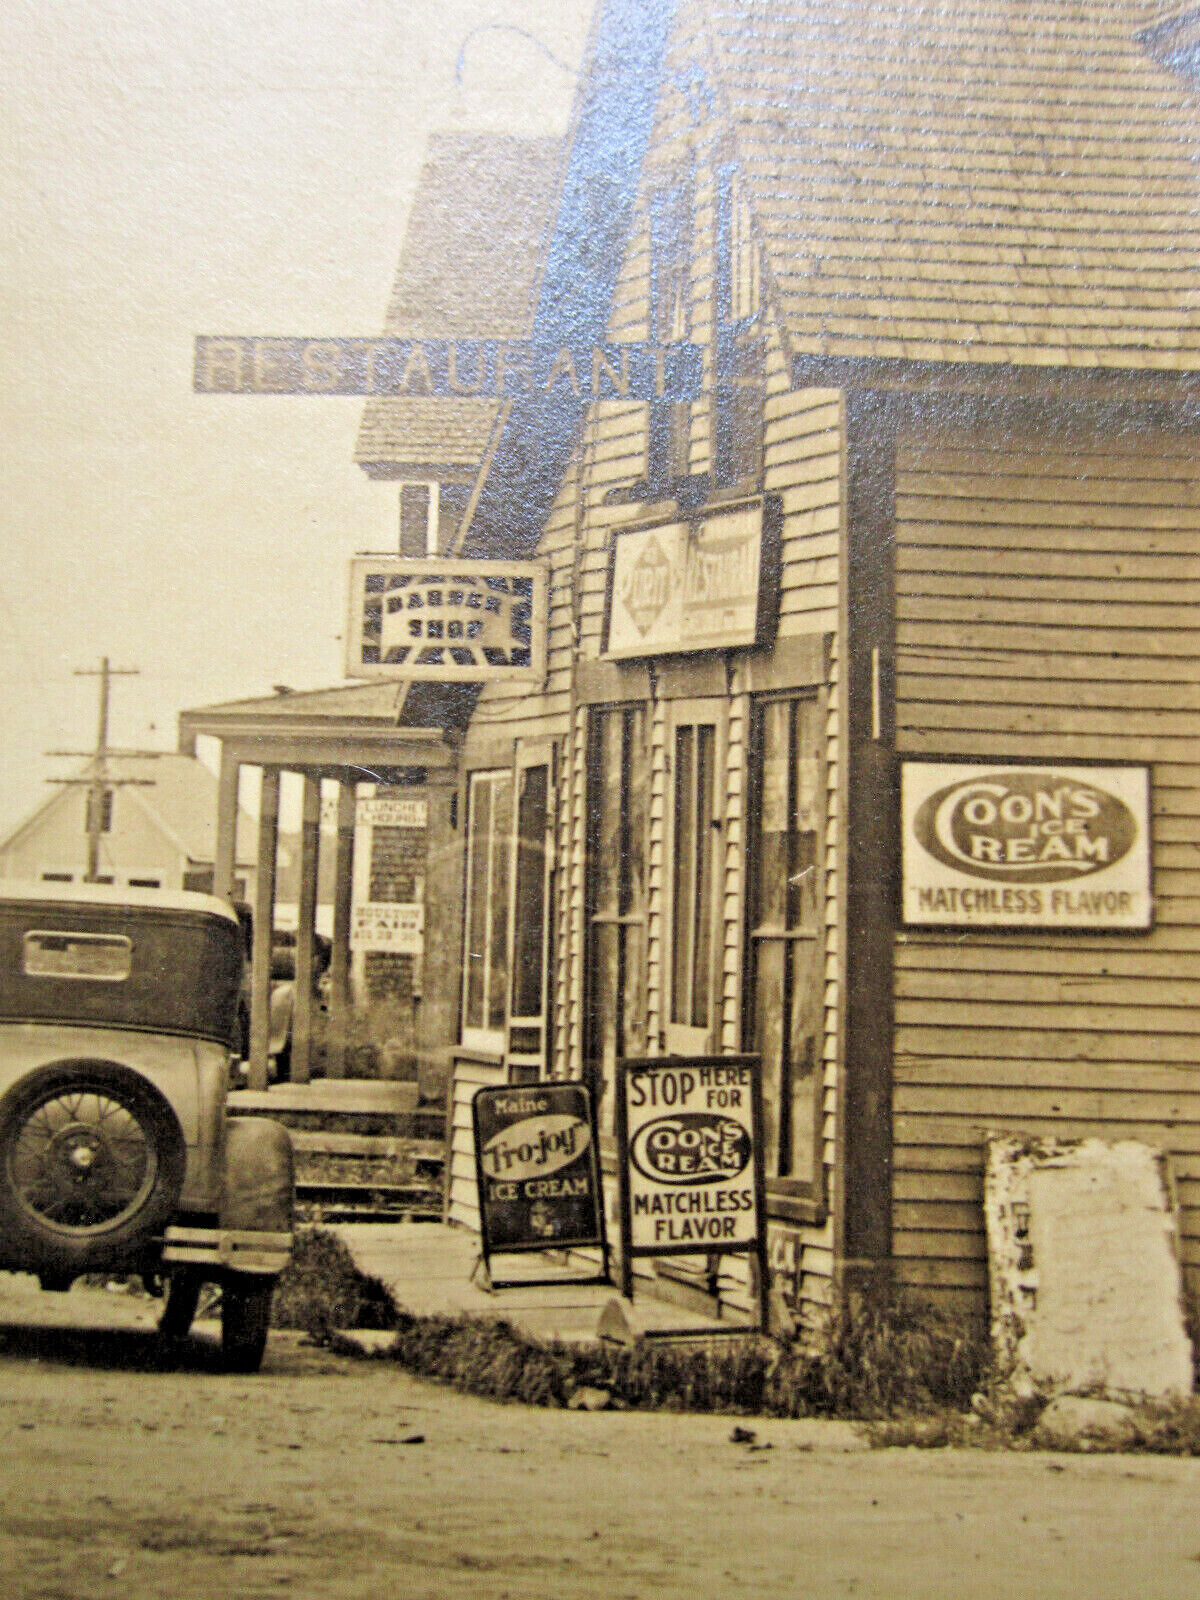 vTg 1928 Main St Coon's Ice Cream x2 & Fro Joy Advertising Signs RPPC PostCard 